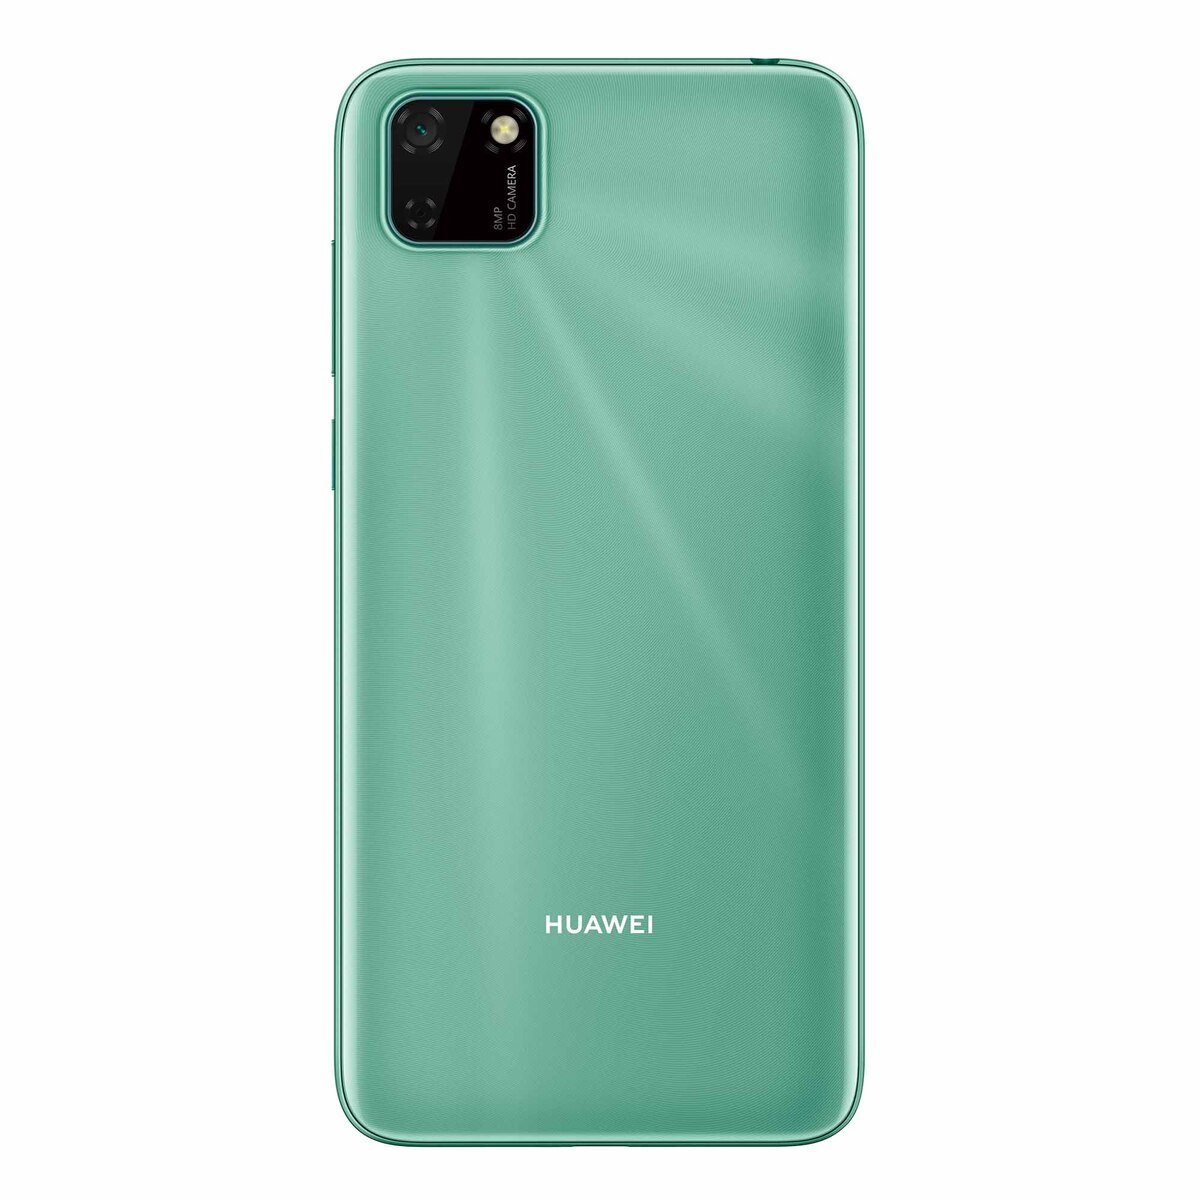 Huawei Y5p 32GB Green